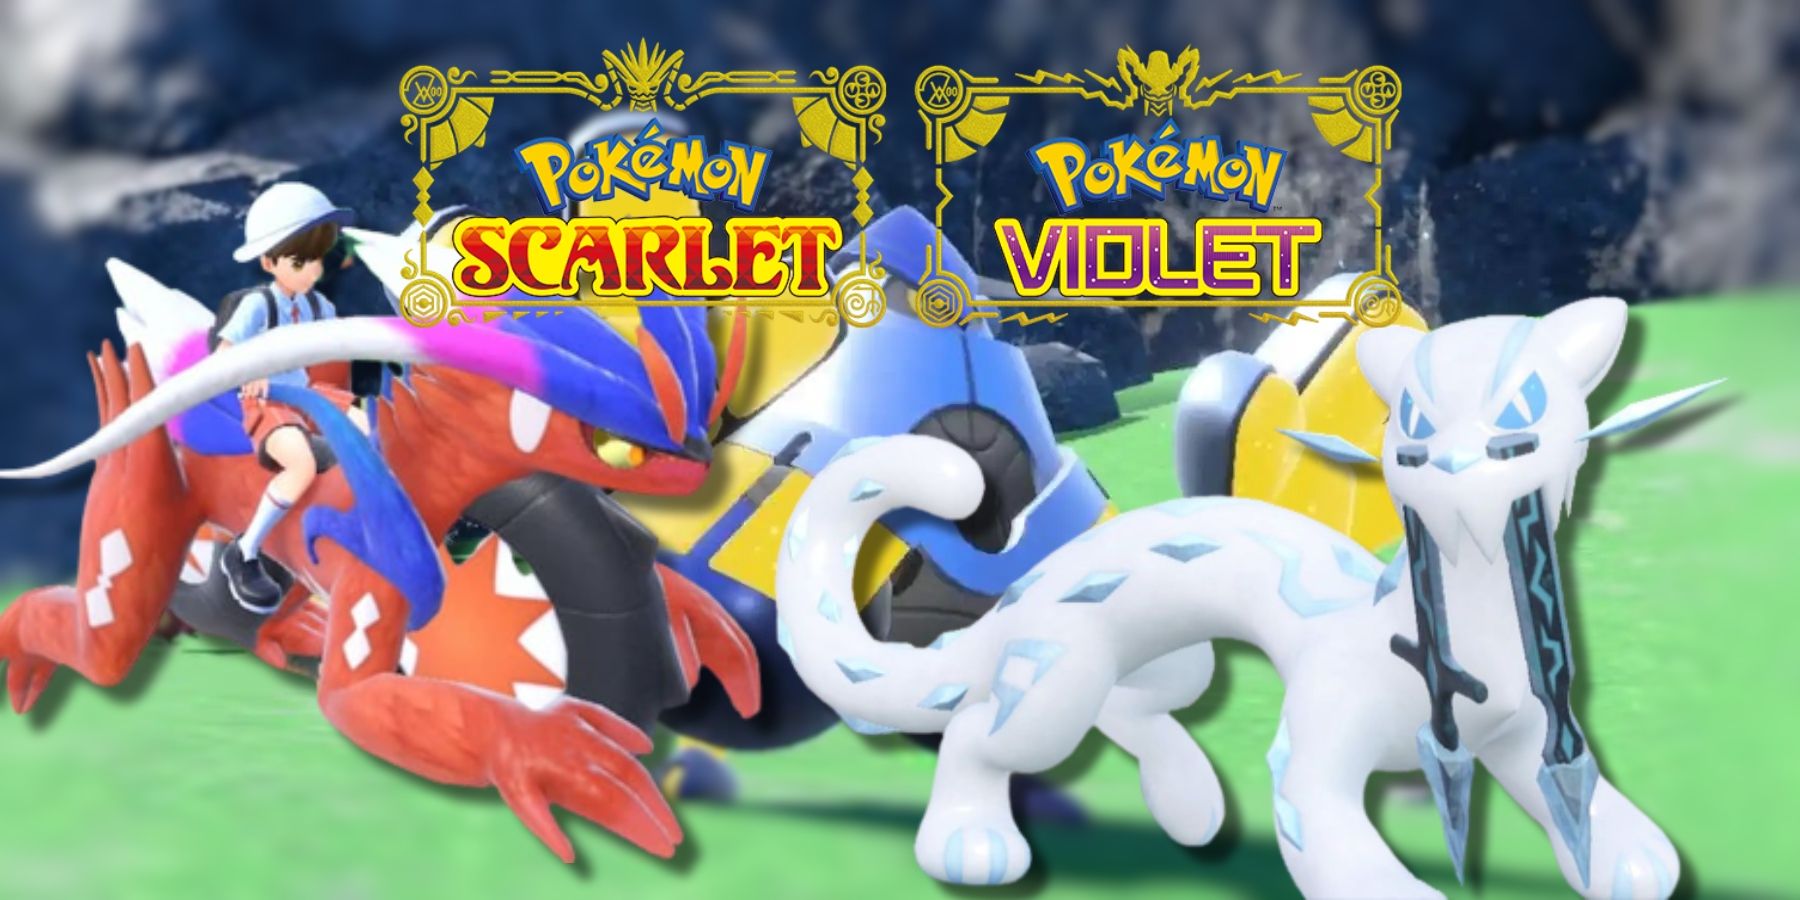 Pokemon Scarlet & Violet: All Paradox Pokemon & how to get them